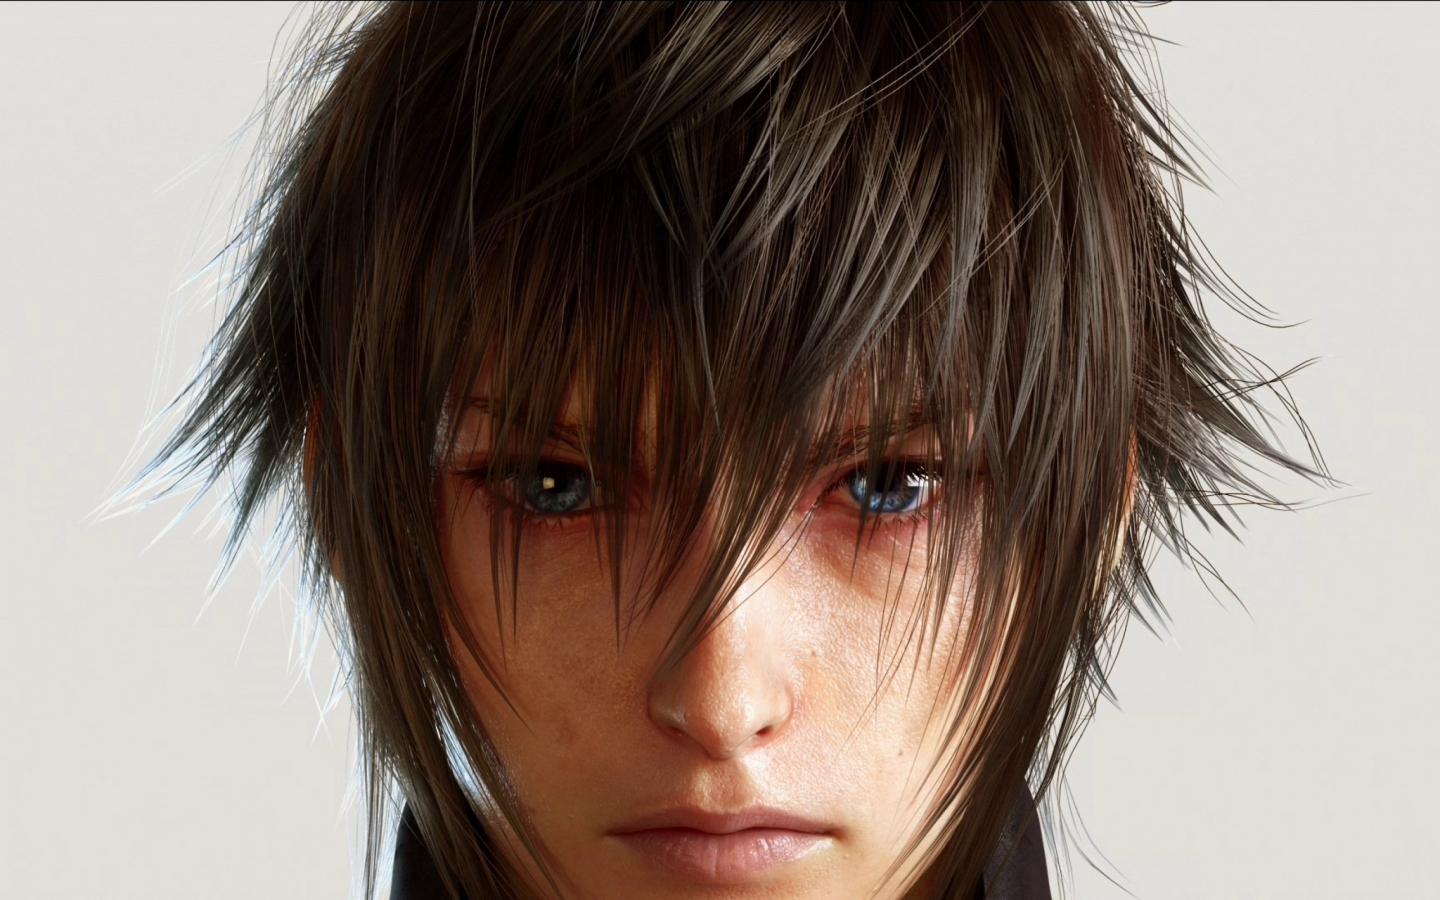 Final Fantasy XV Close Details for 1440 x 900 widescreen resolution